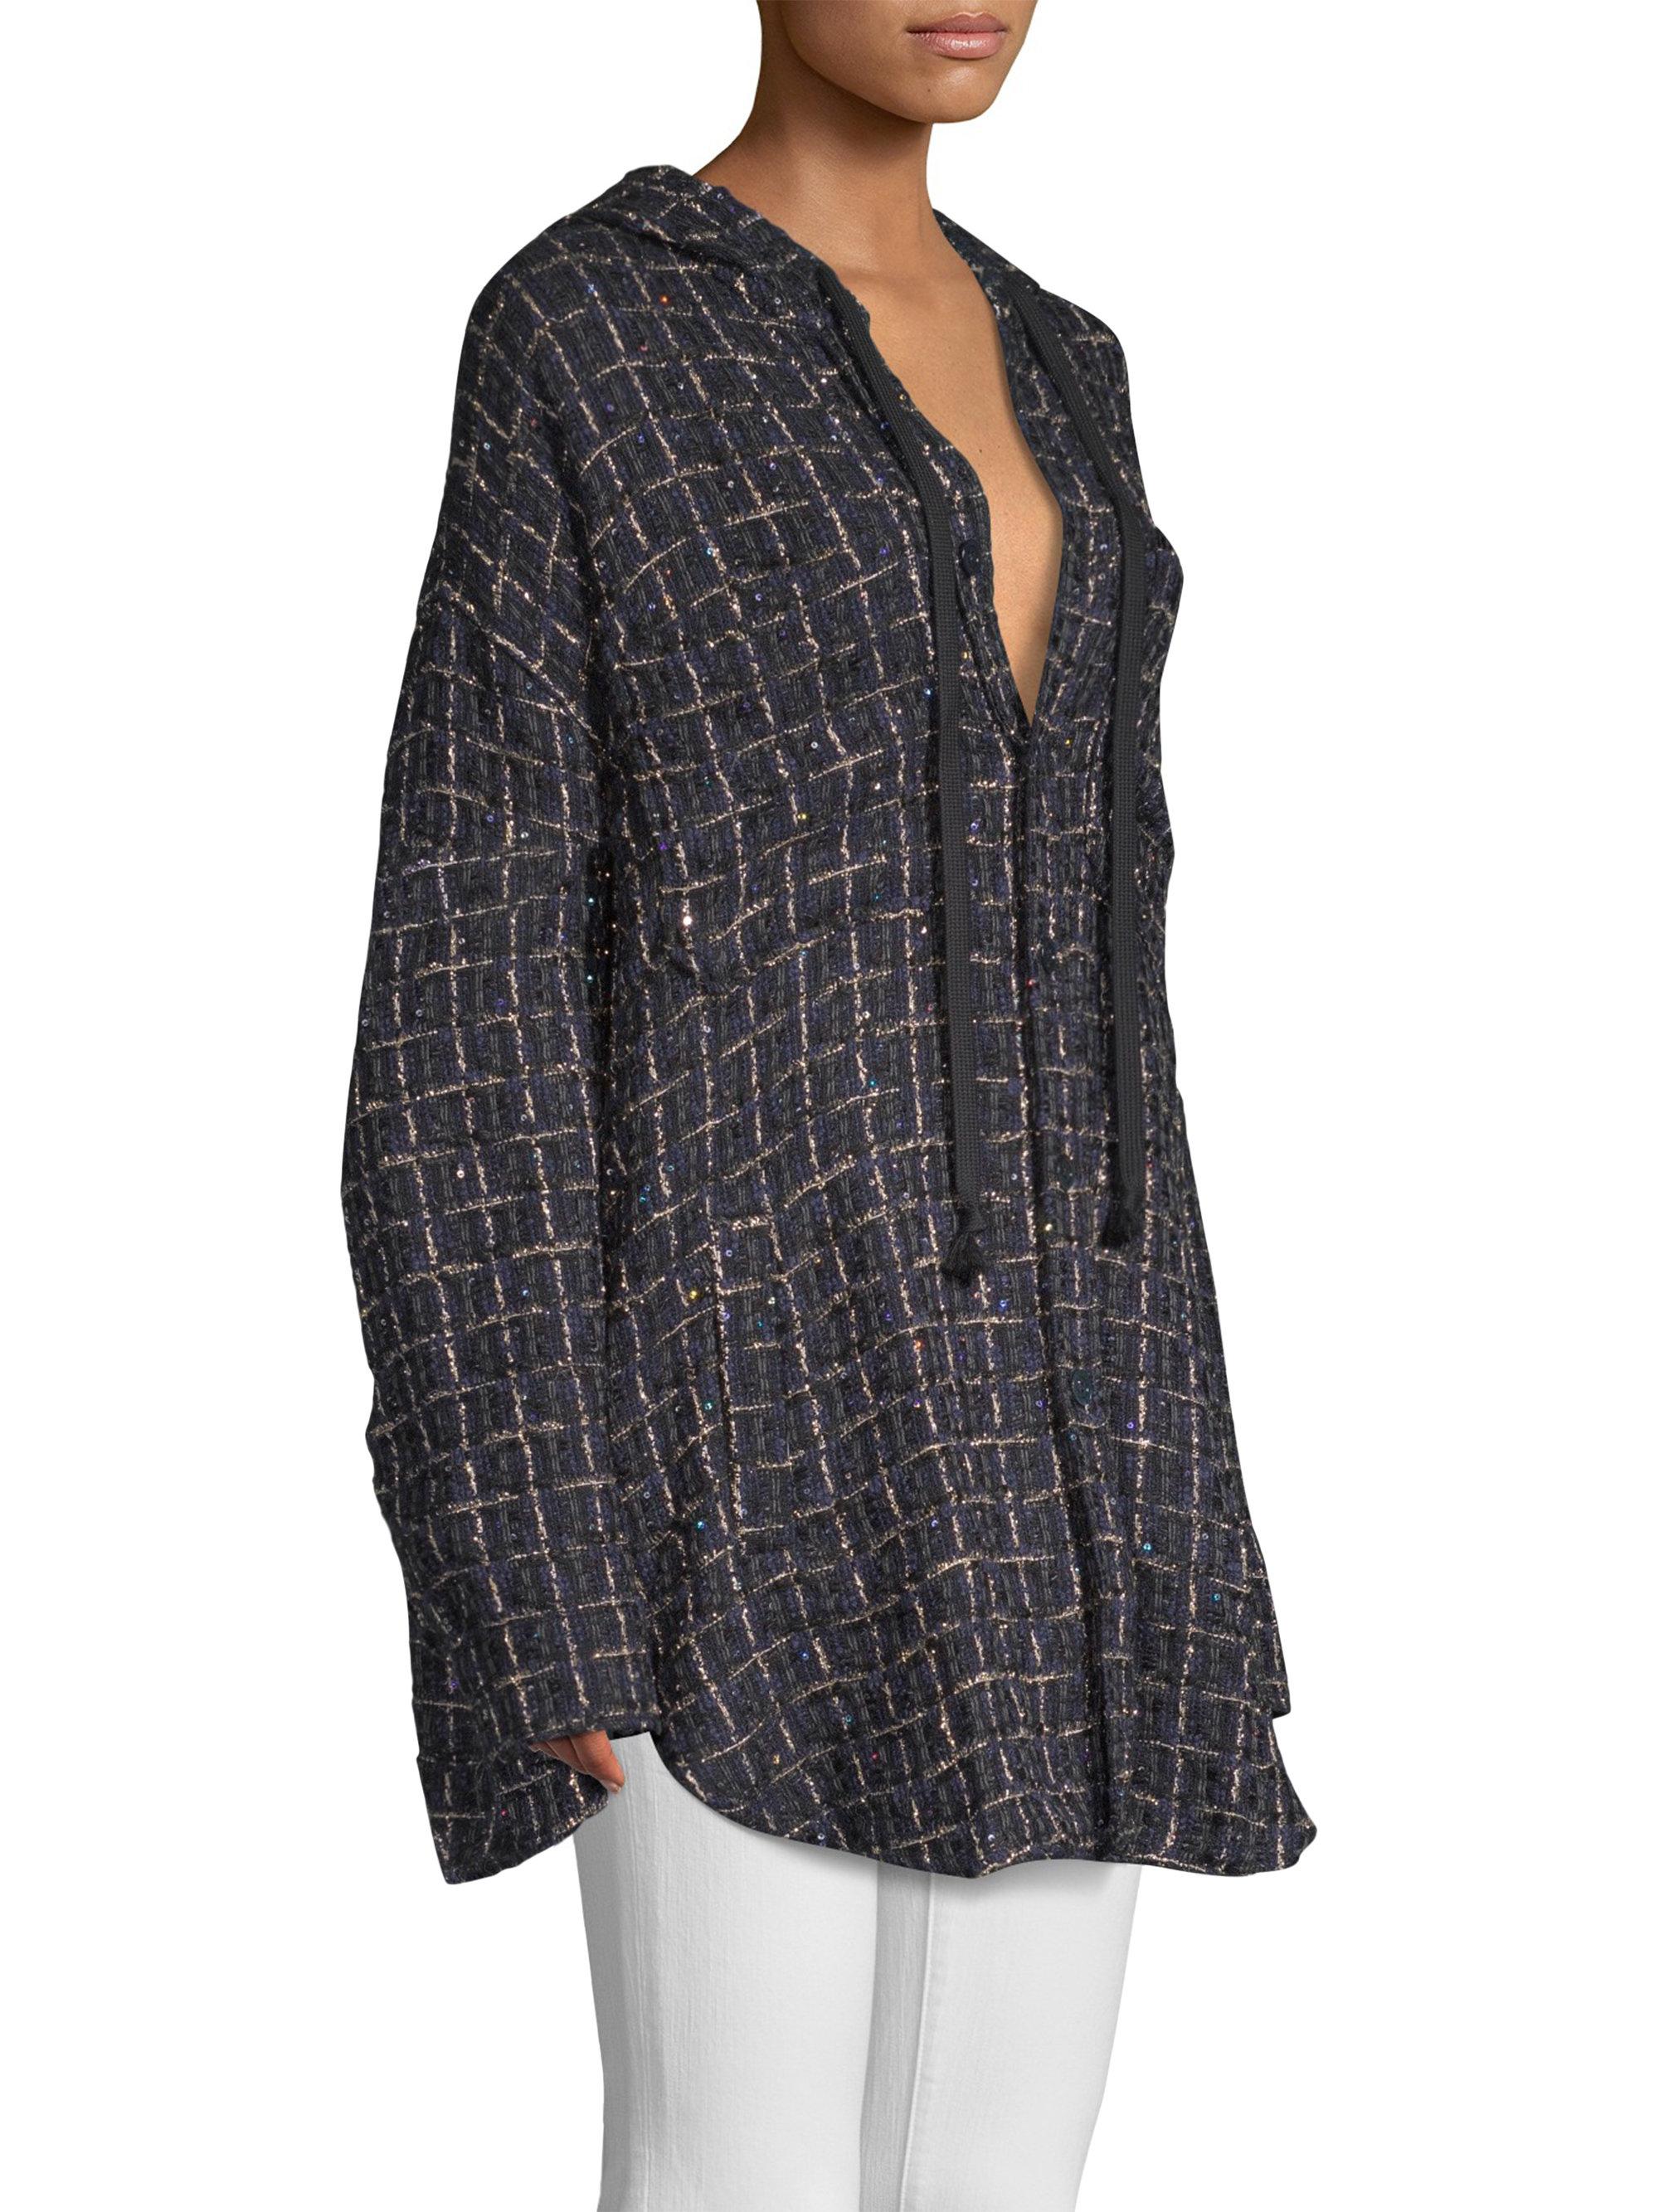 Faith Connexion Tweed Button-front Sweatshirt in Black - Lyst